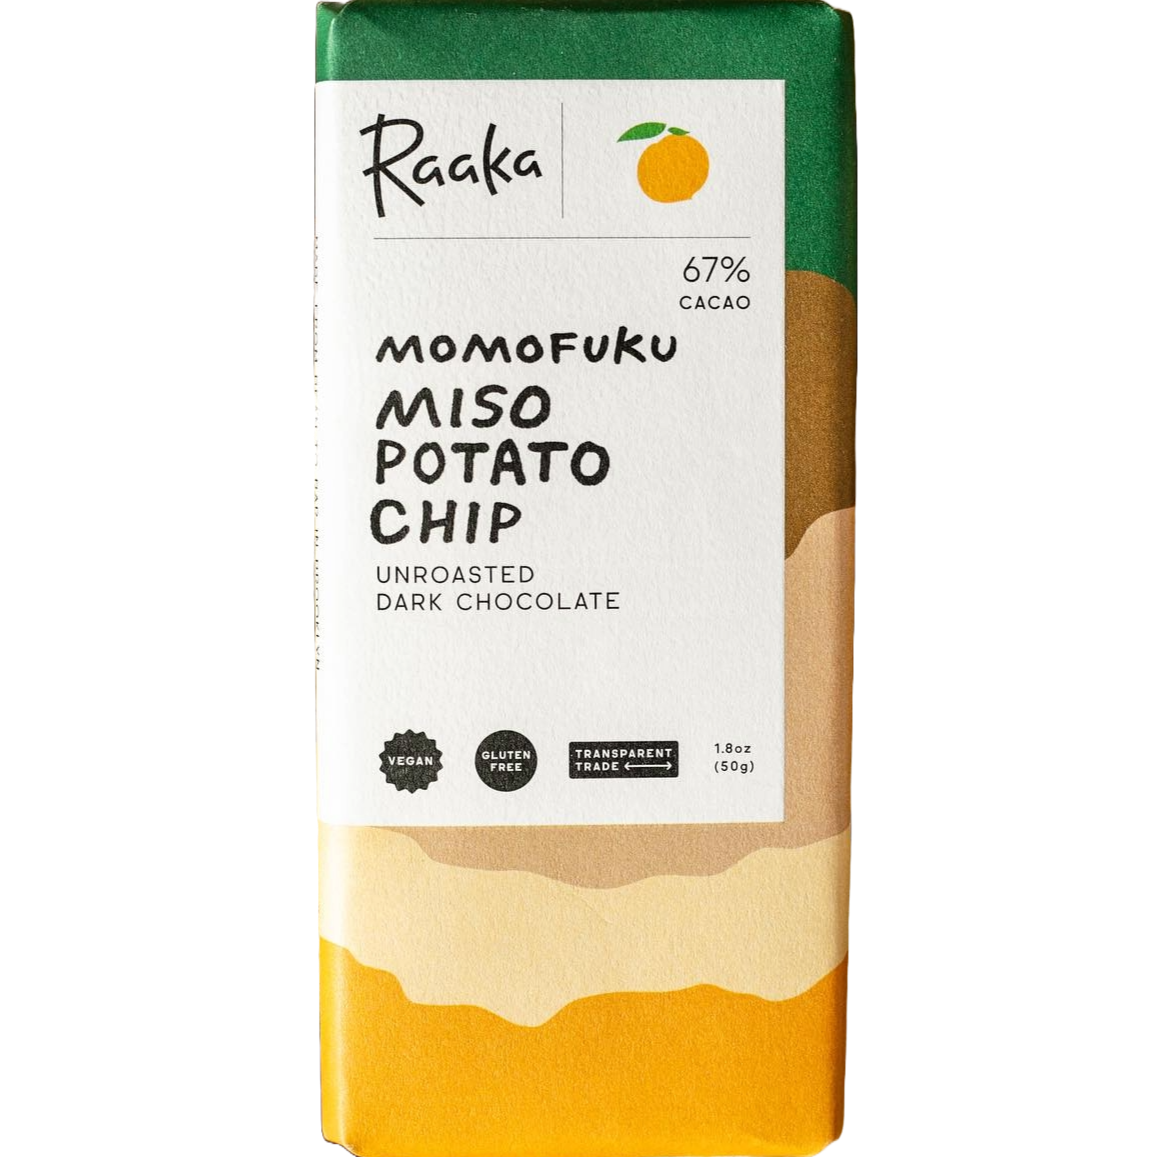 Momofuku x Raaka | Chocolate: Miso Potato Chip (51g)